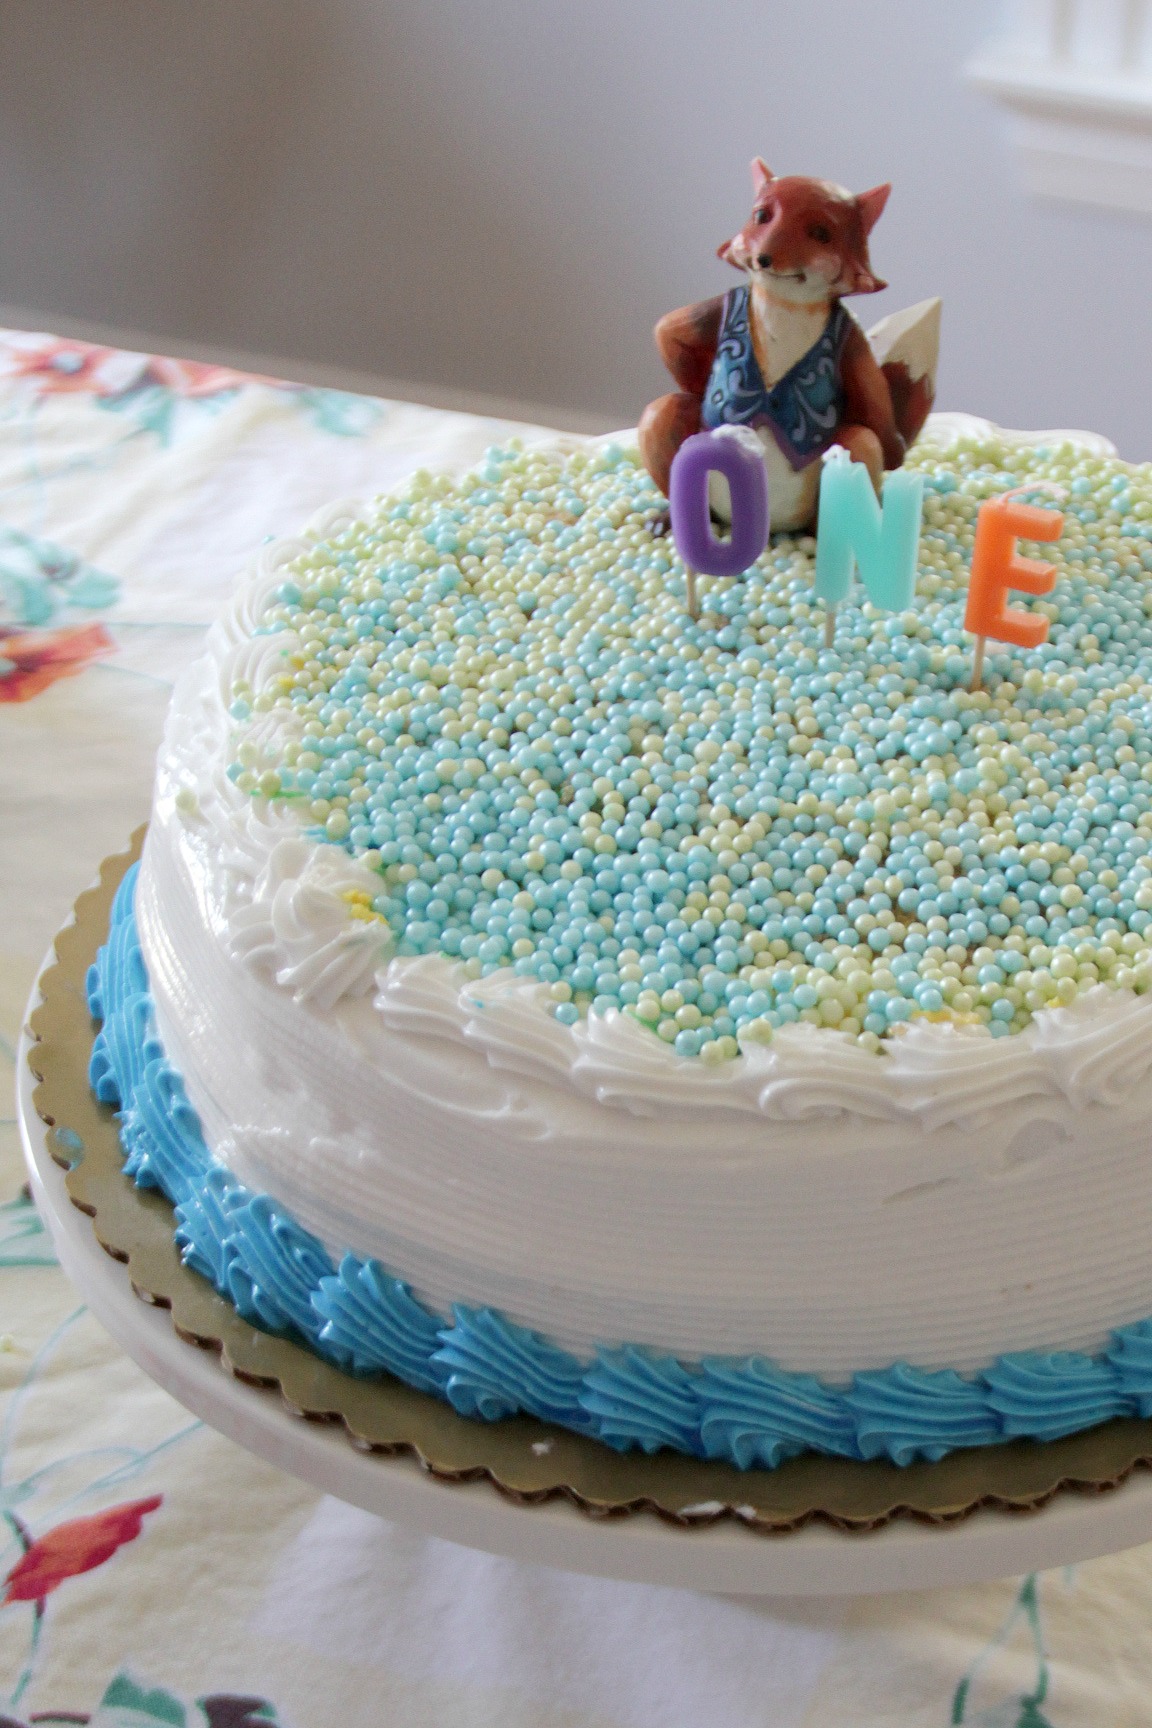 Ezra's birthday cake